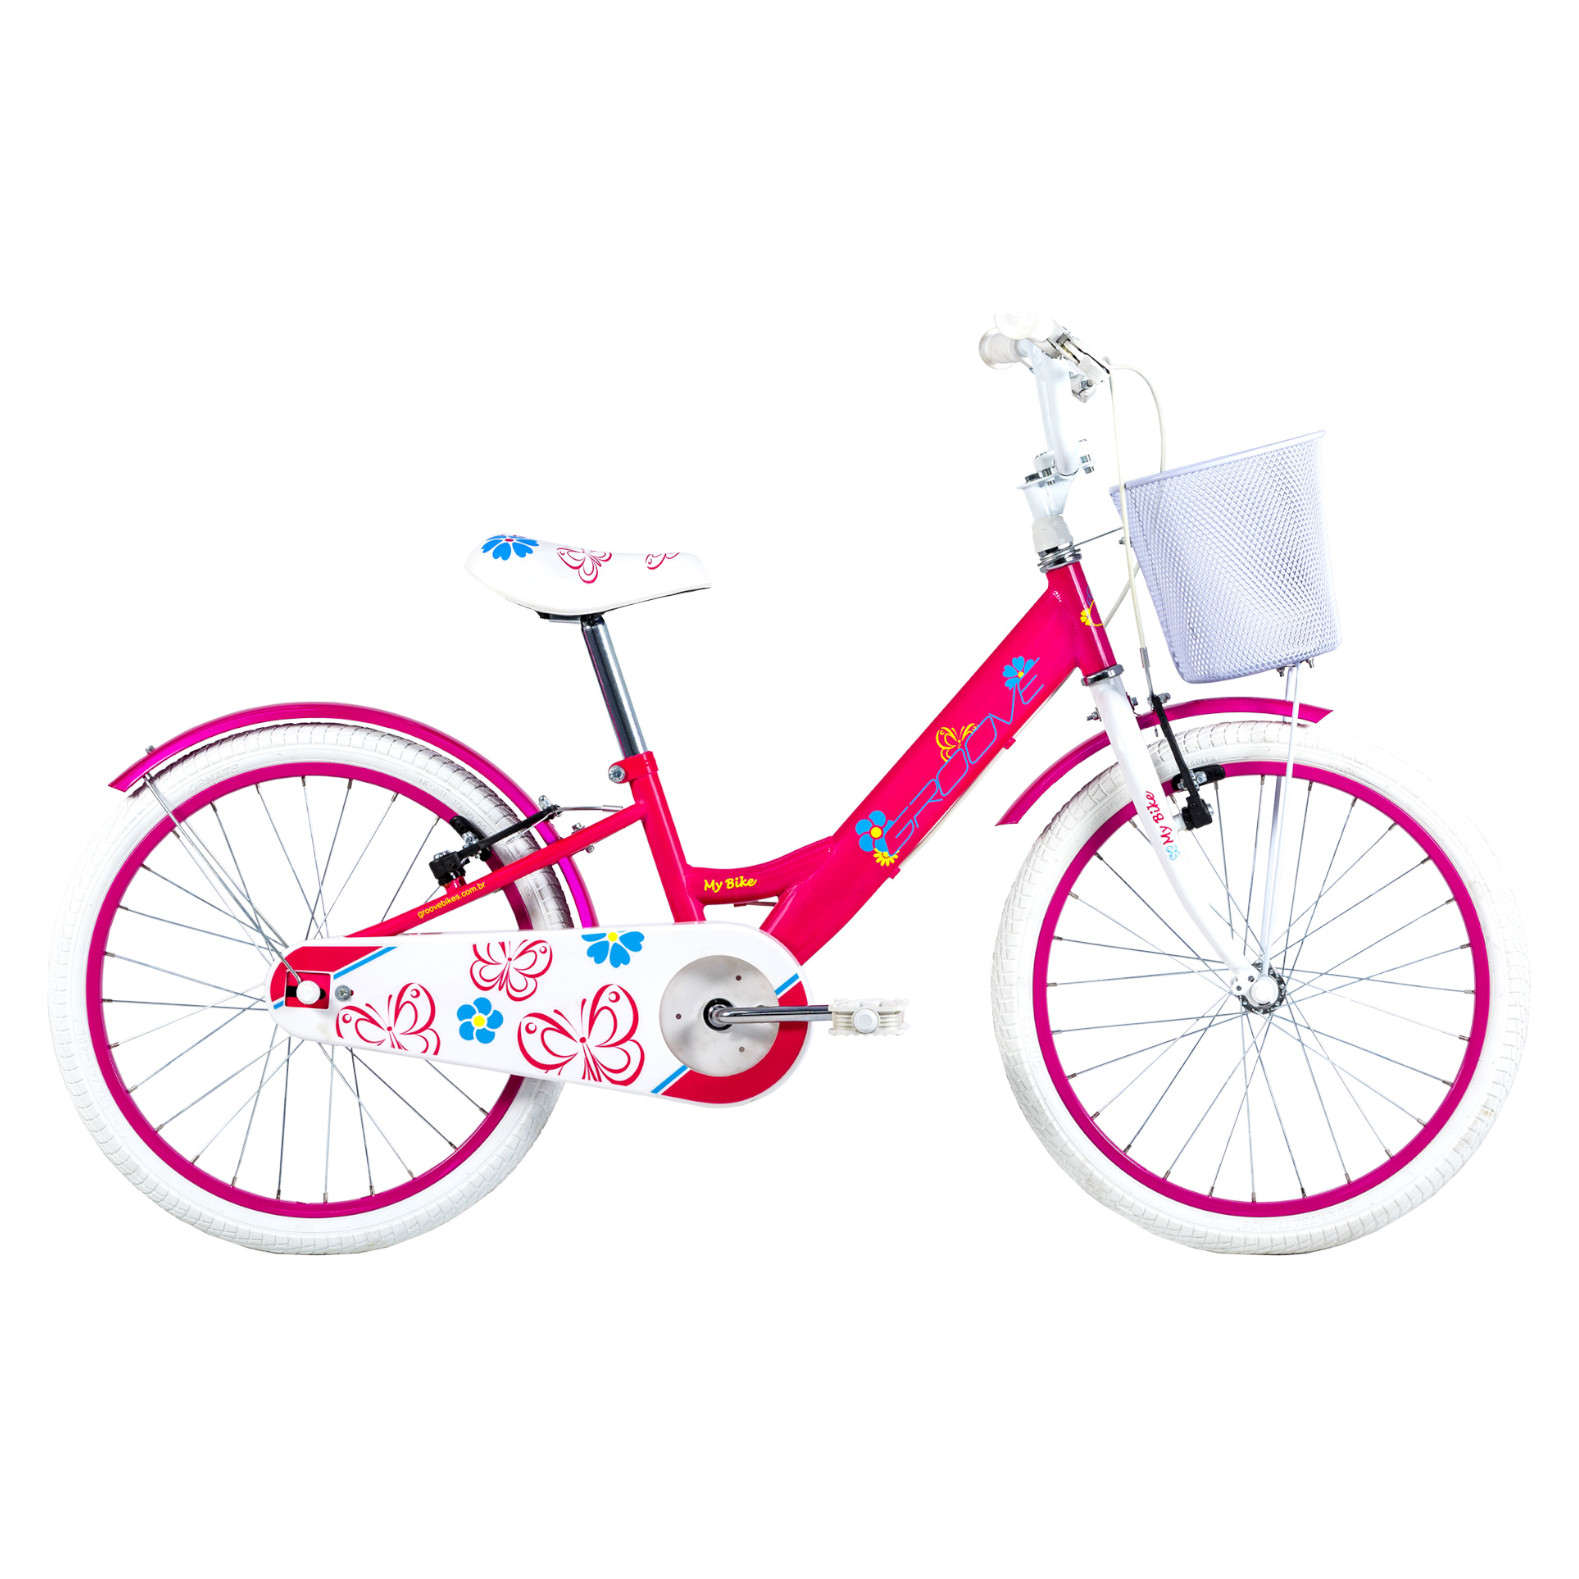 Bicicleta Infantil Groove My Bike Aro 20 2021